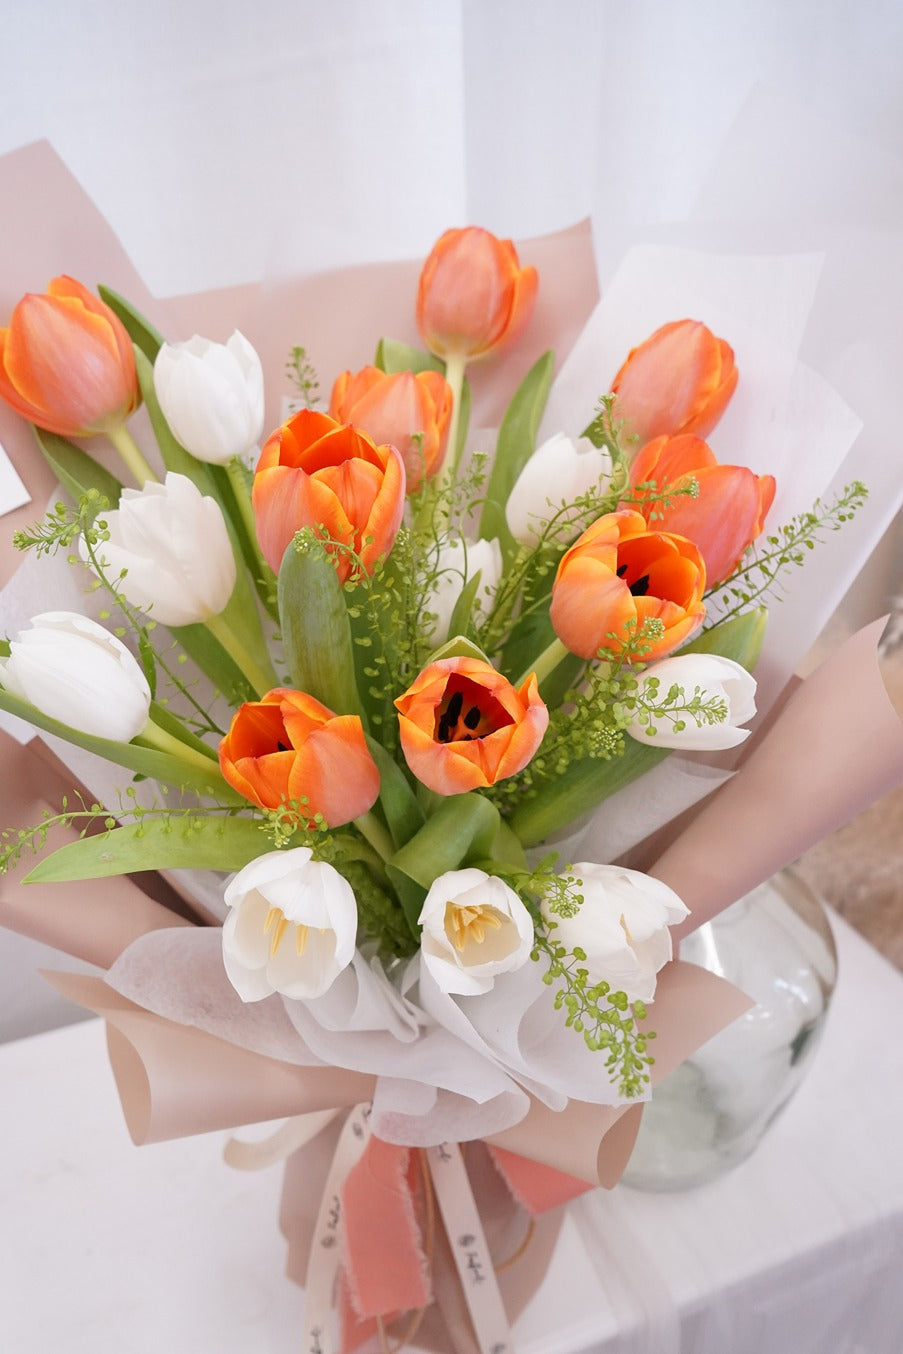 Tulip (2 Colors) - Fresh flowers, Tulips- 18 stems - Orange - Yellow - Anniversary - Birthday - Bouquet - 7